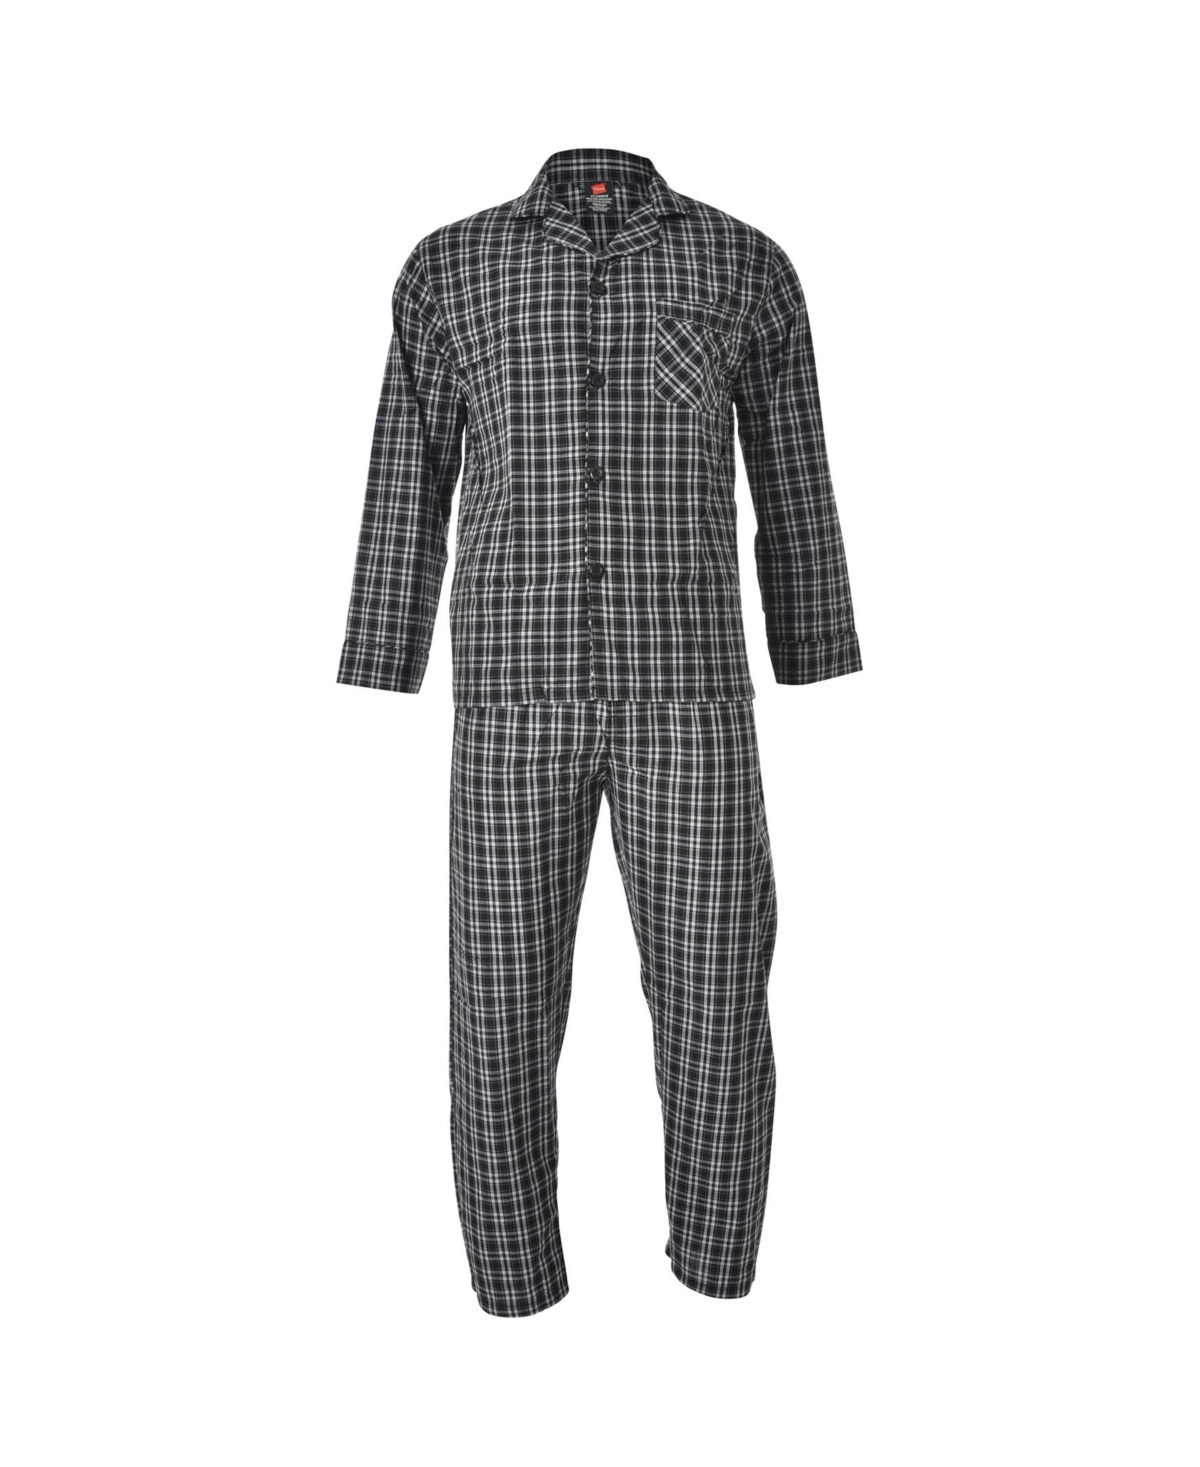 Hanes Men's Pajama Set - Red Plaid